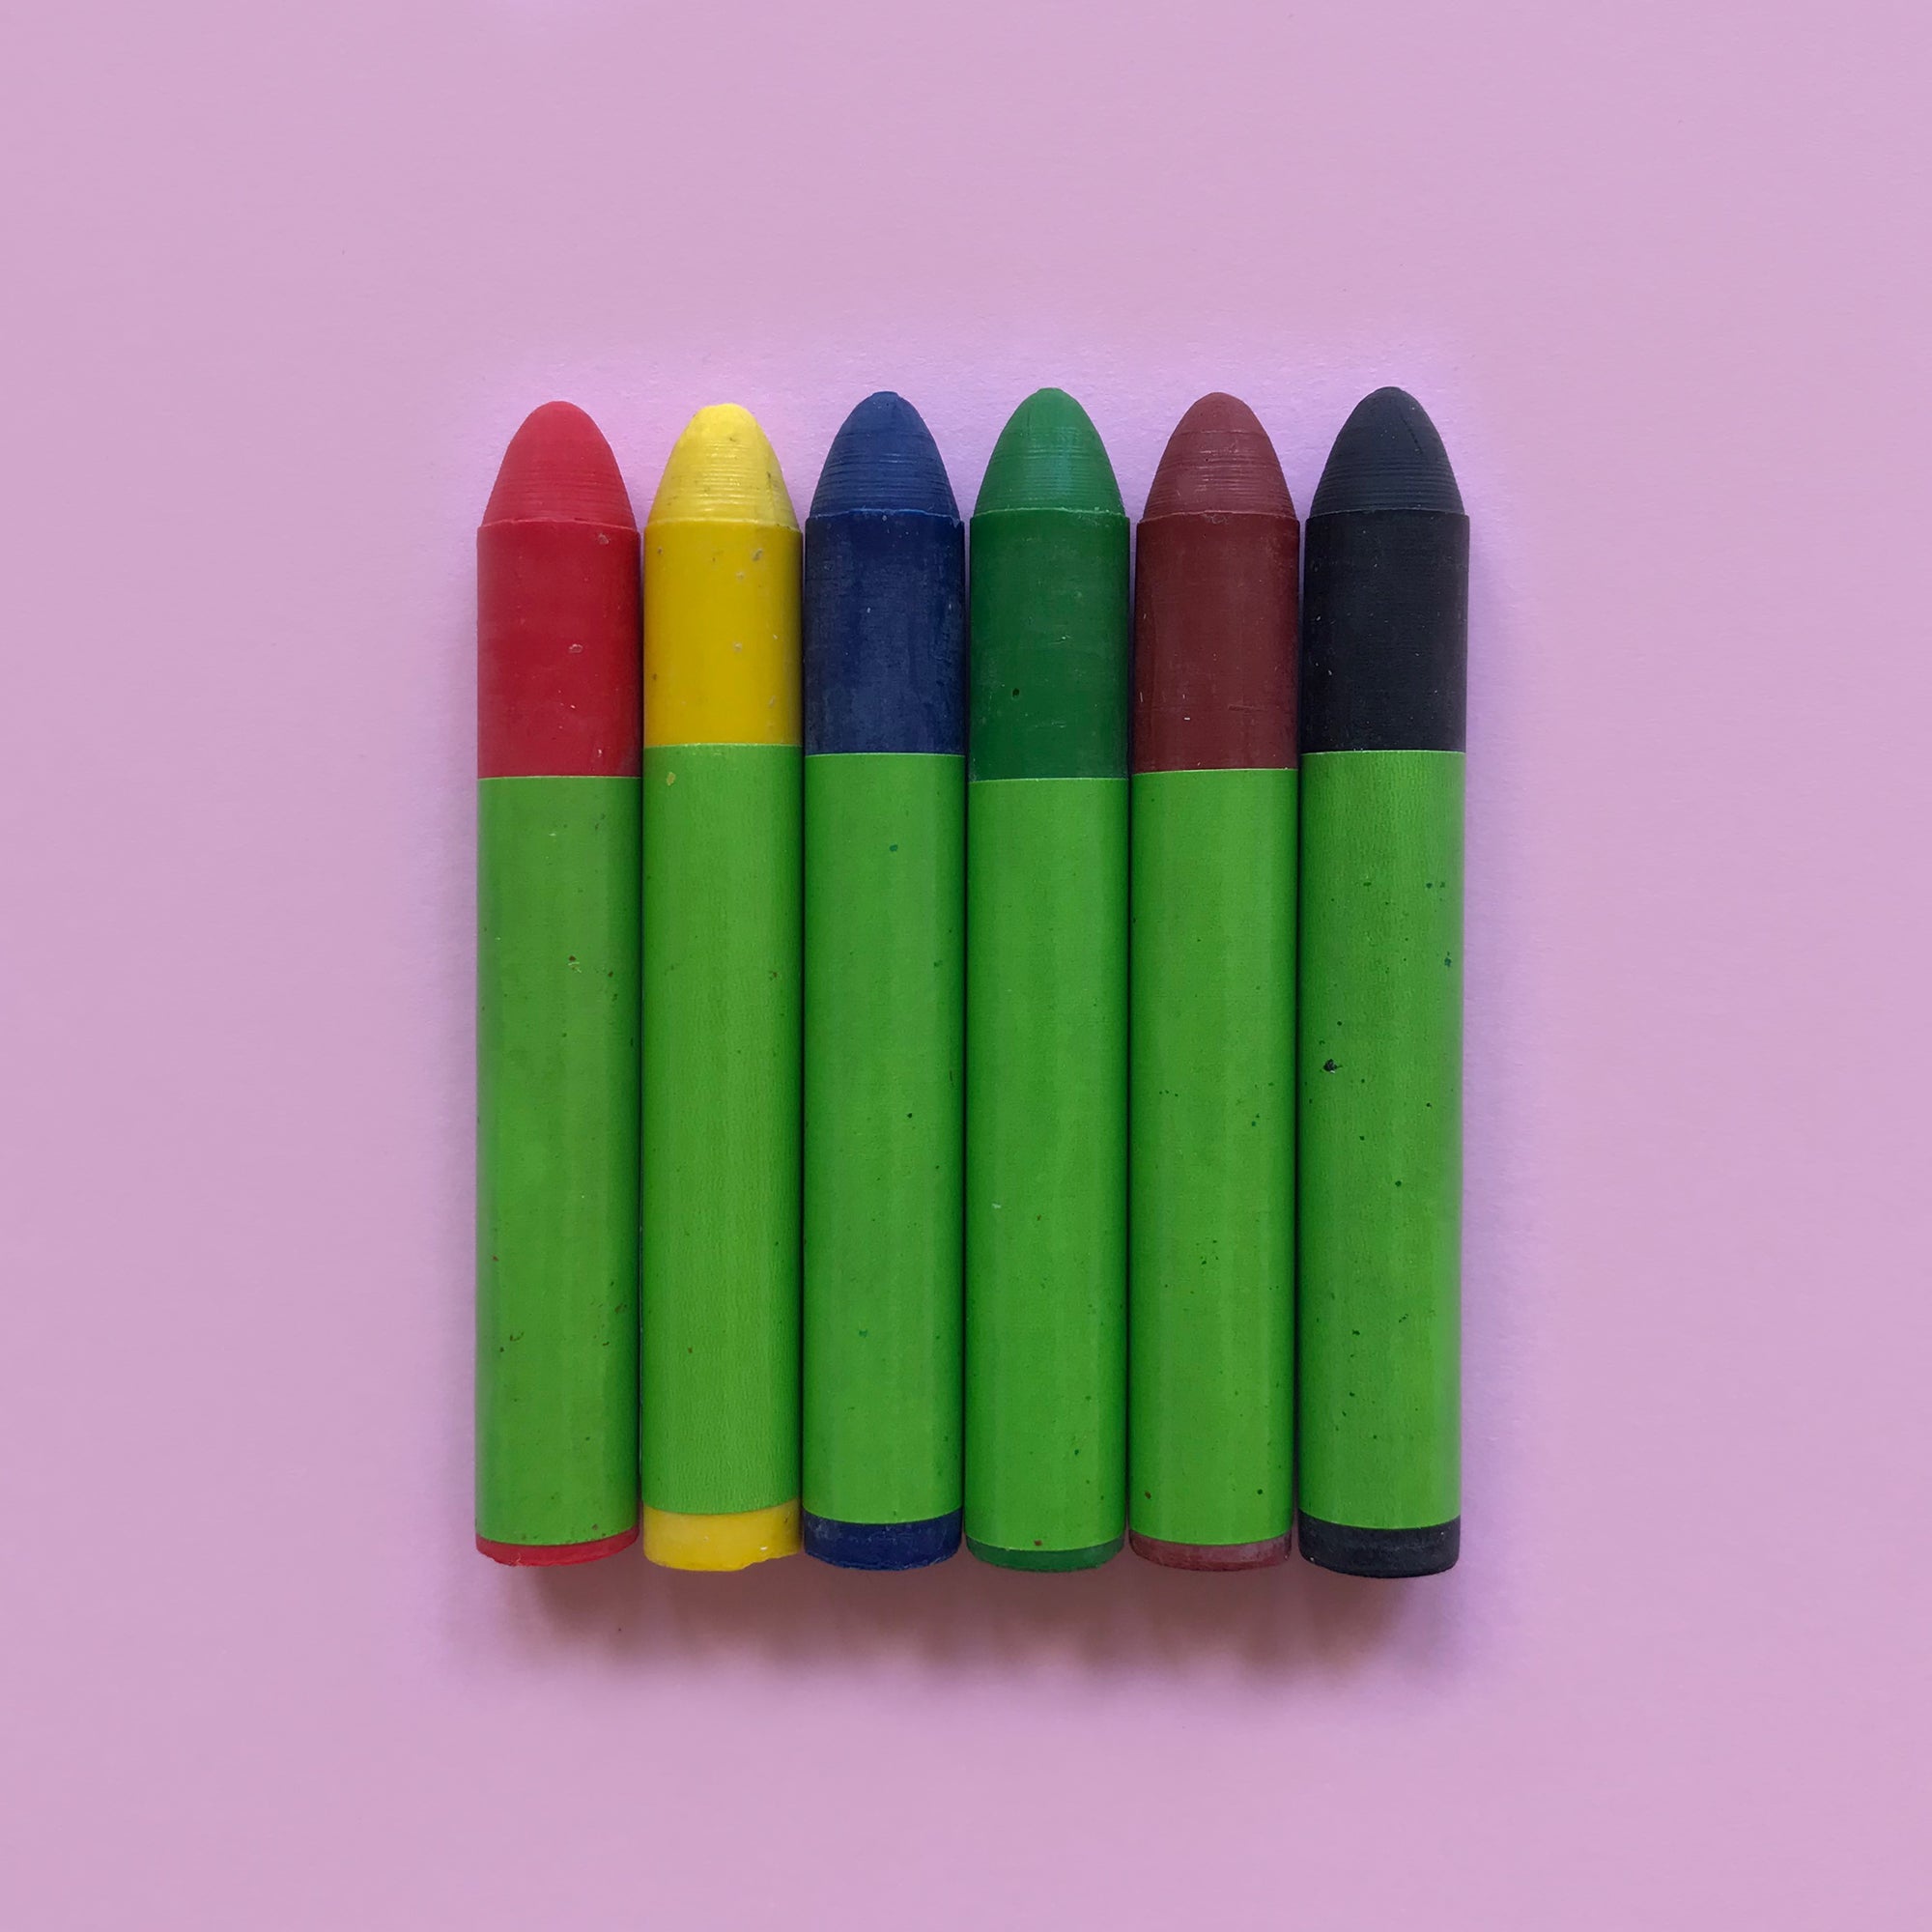 Nawaro 6 Colour Wax Crayons - 40% OFF